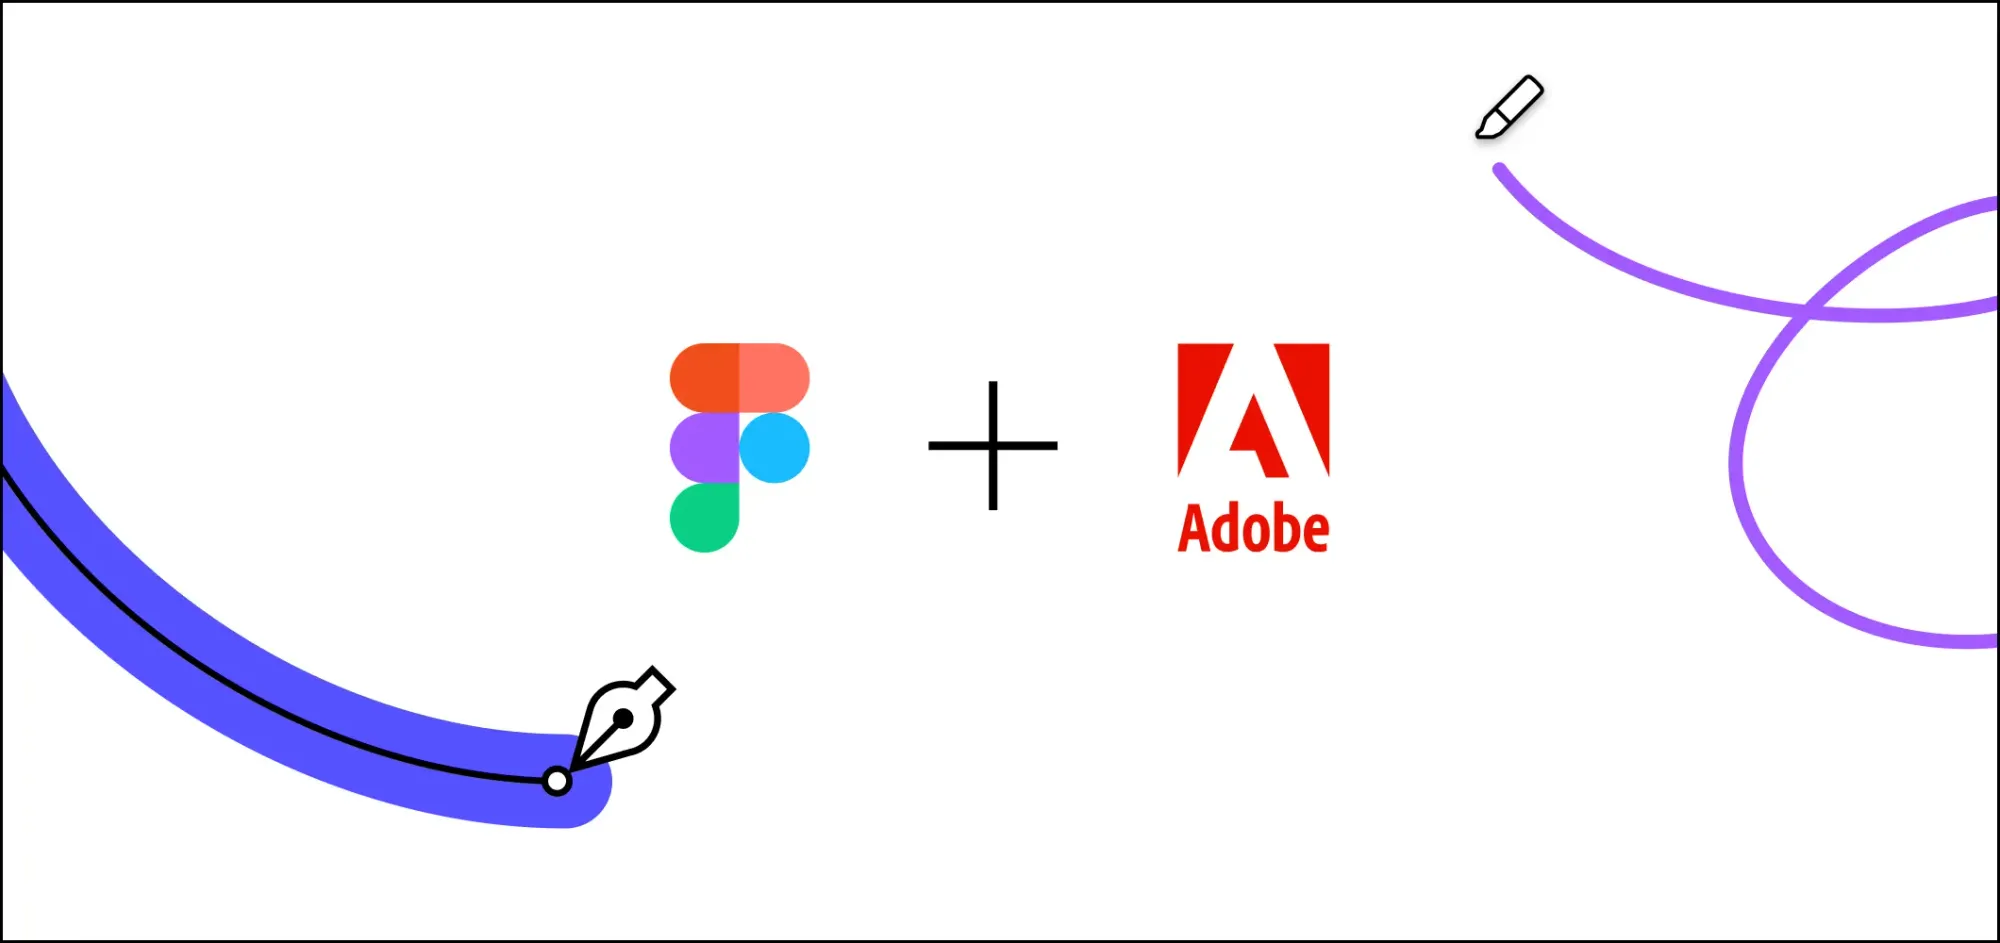 Adobe купит Figma за 20 миллиардов долларов